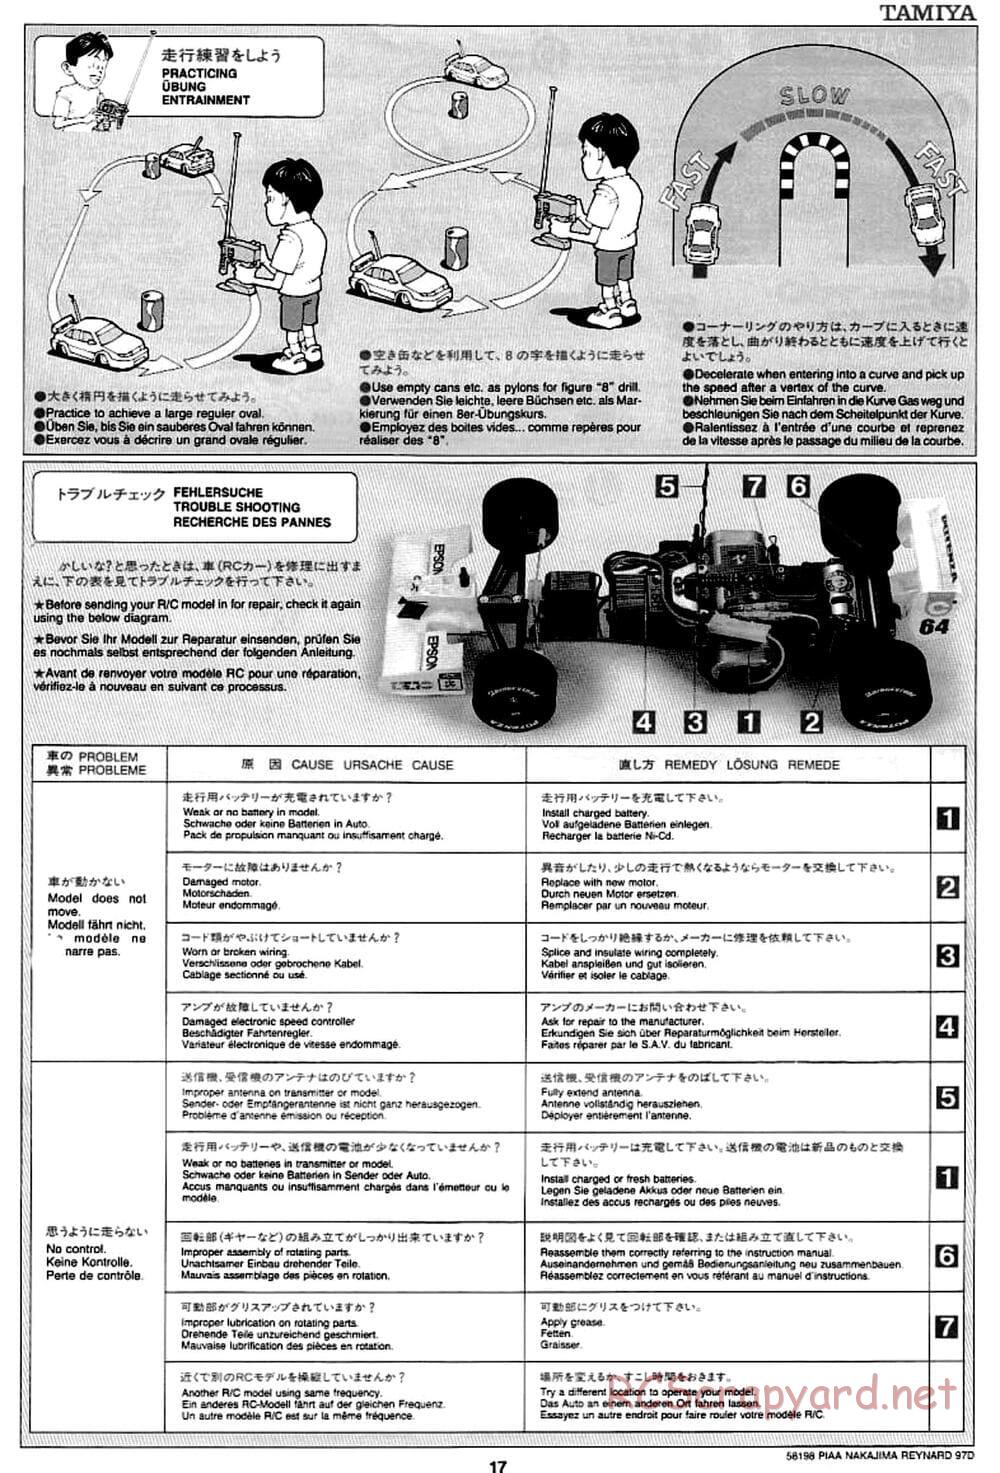 Tamiya - PIAA Nakajima Reynard 97D - F103 Chassis - Manual - Page 17